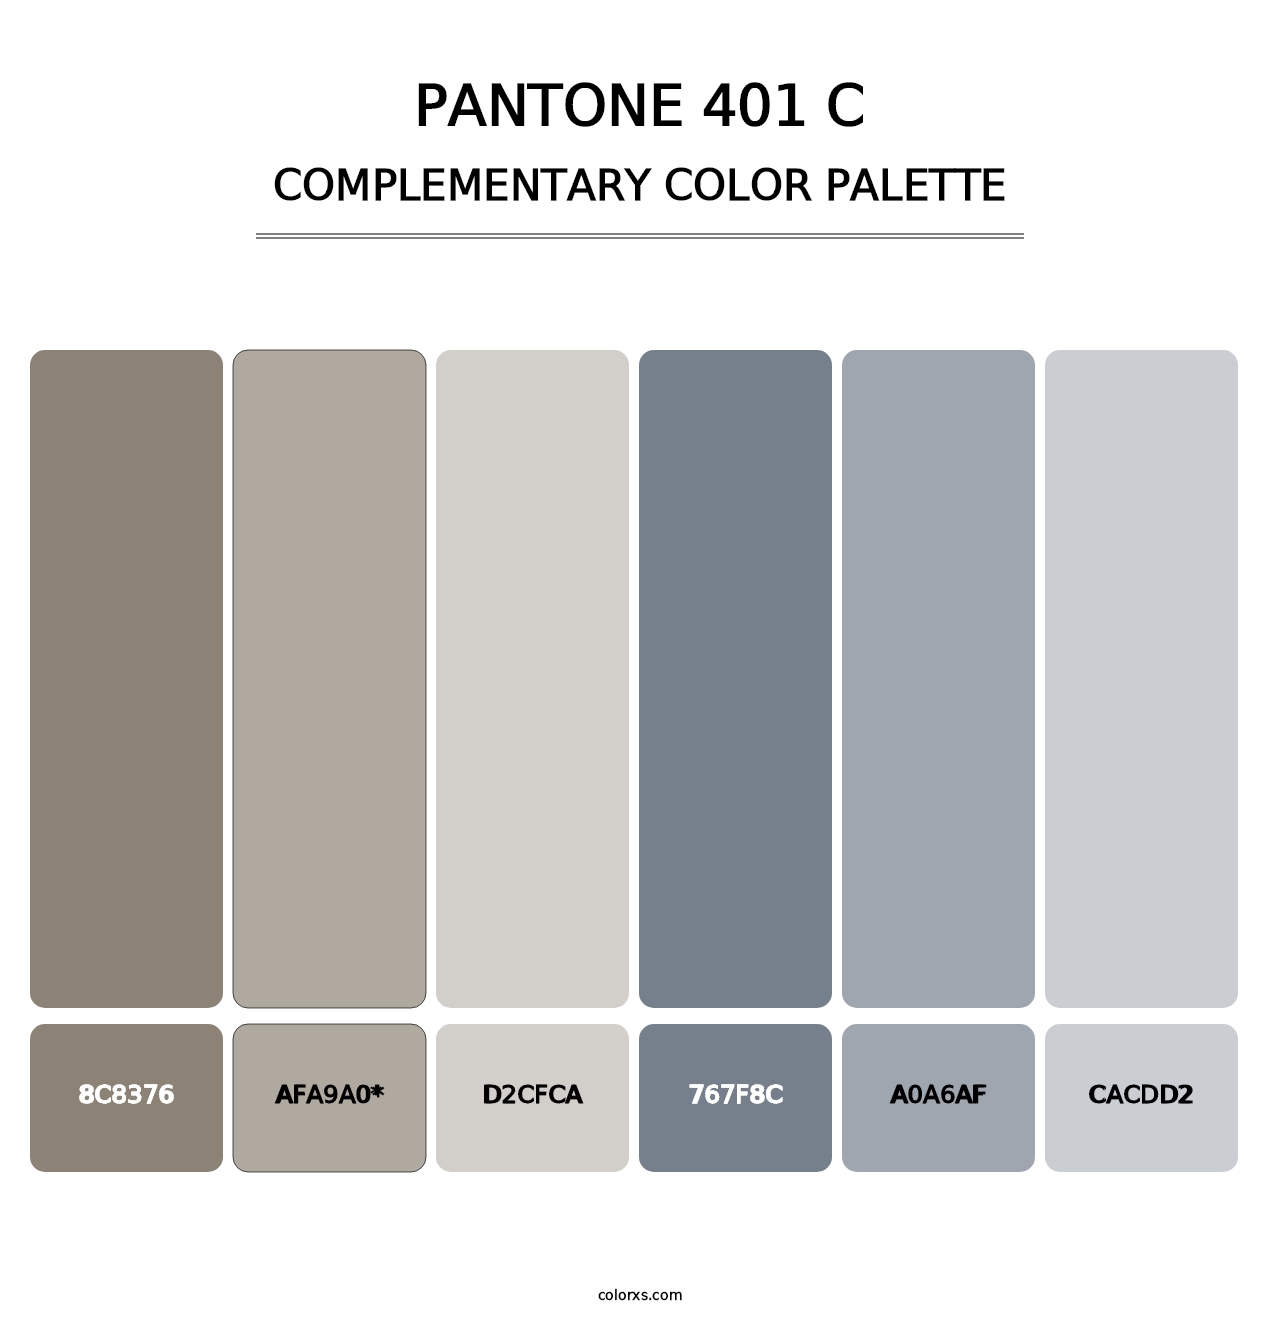 PANTONE 401 C - Complementary Color Palette